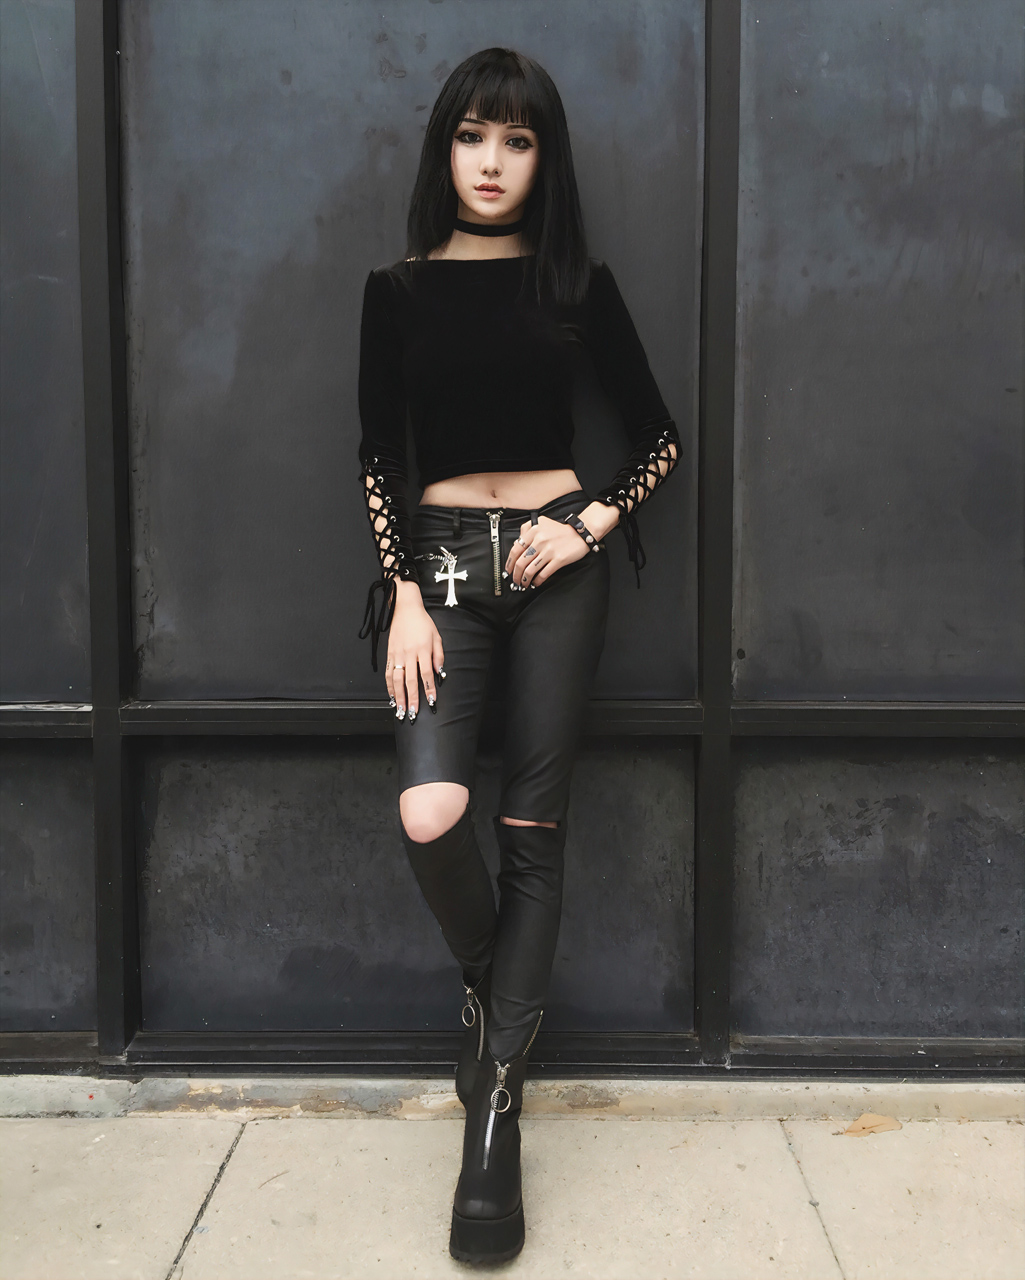 Women Model Choker Black Clothing Alt Girls Dark Hair Long Hair Urban Boots Leather Pants Standing 1025x1280